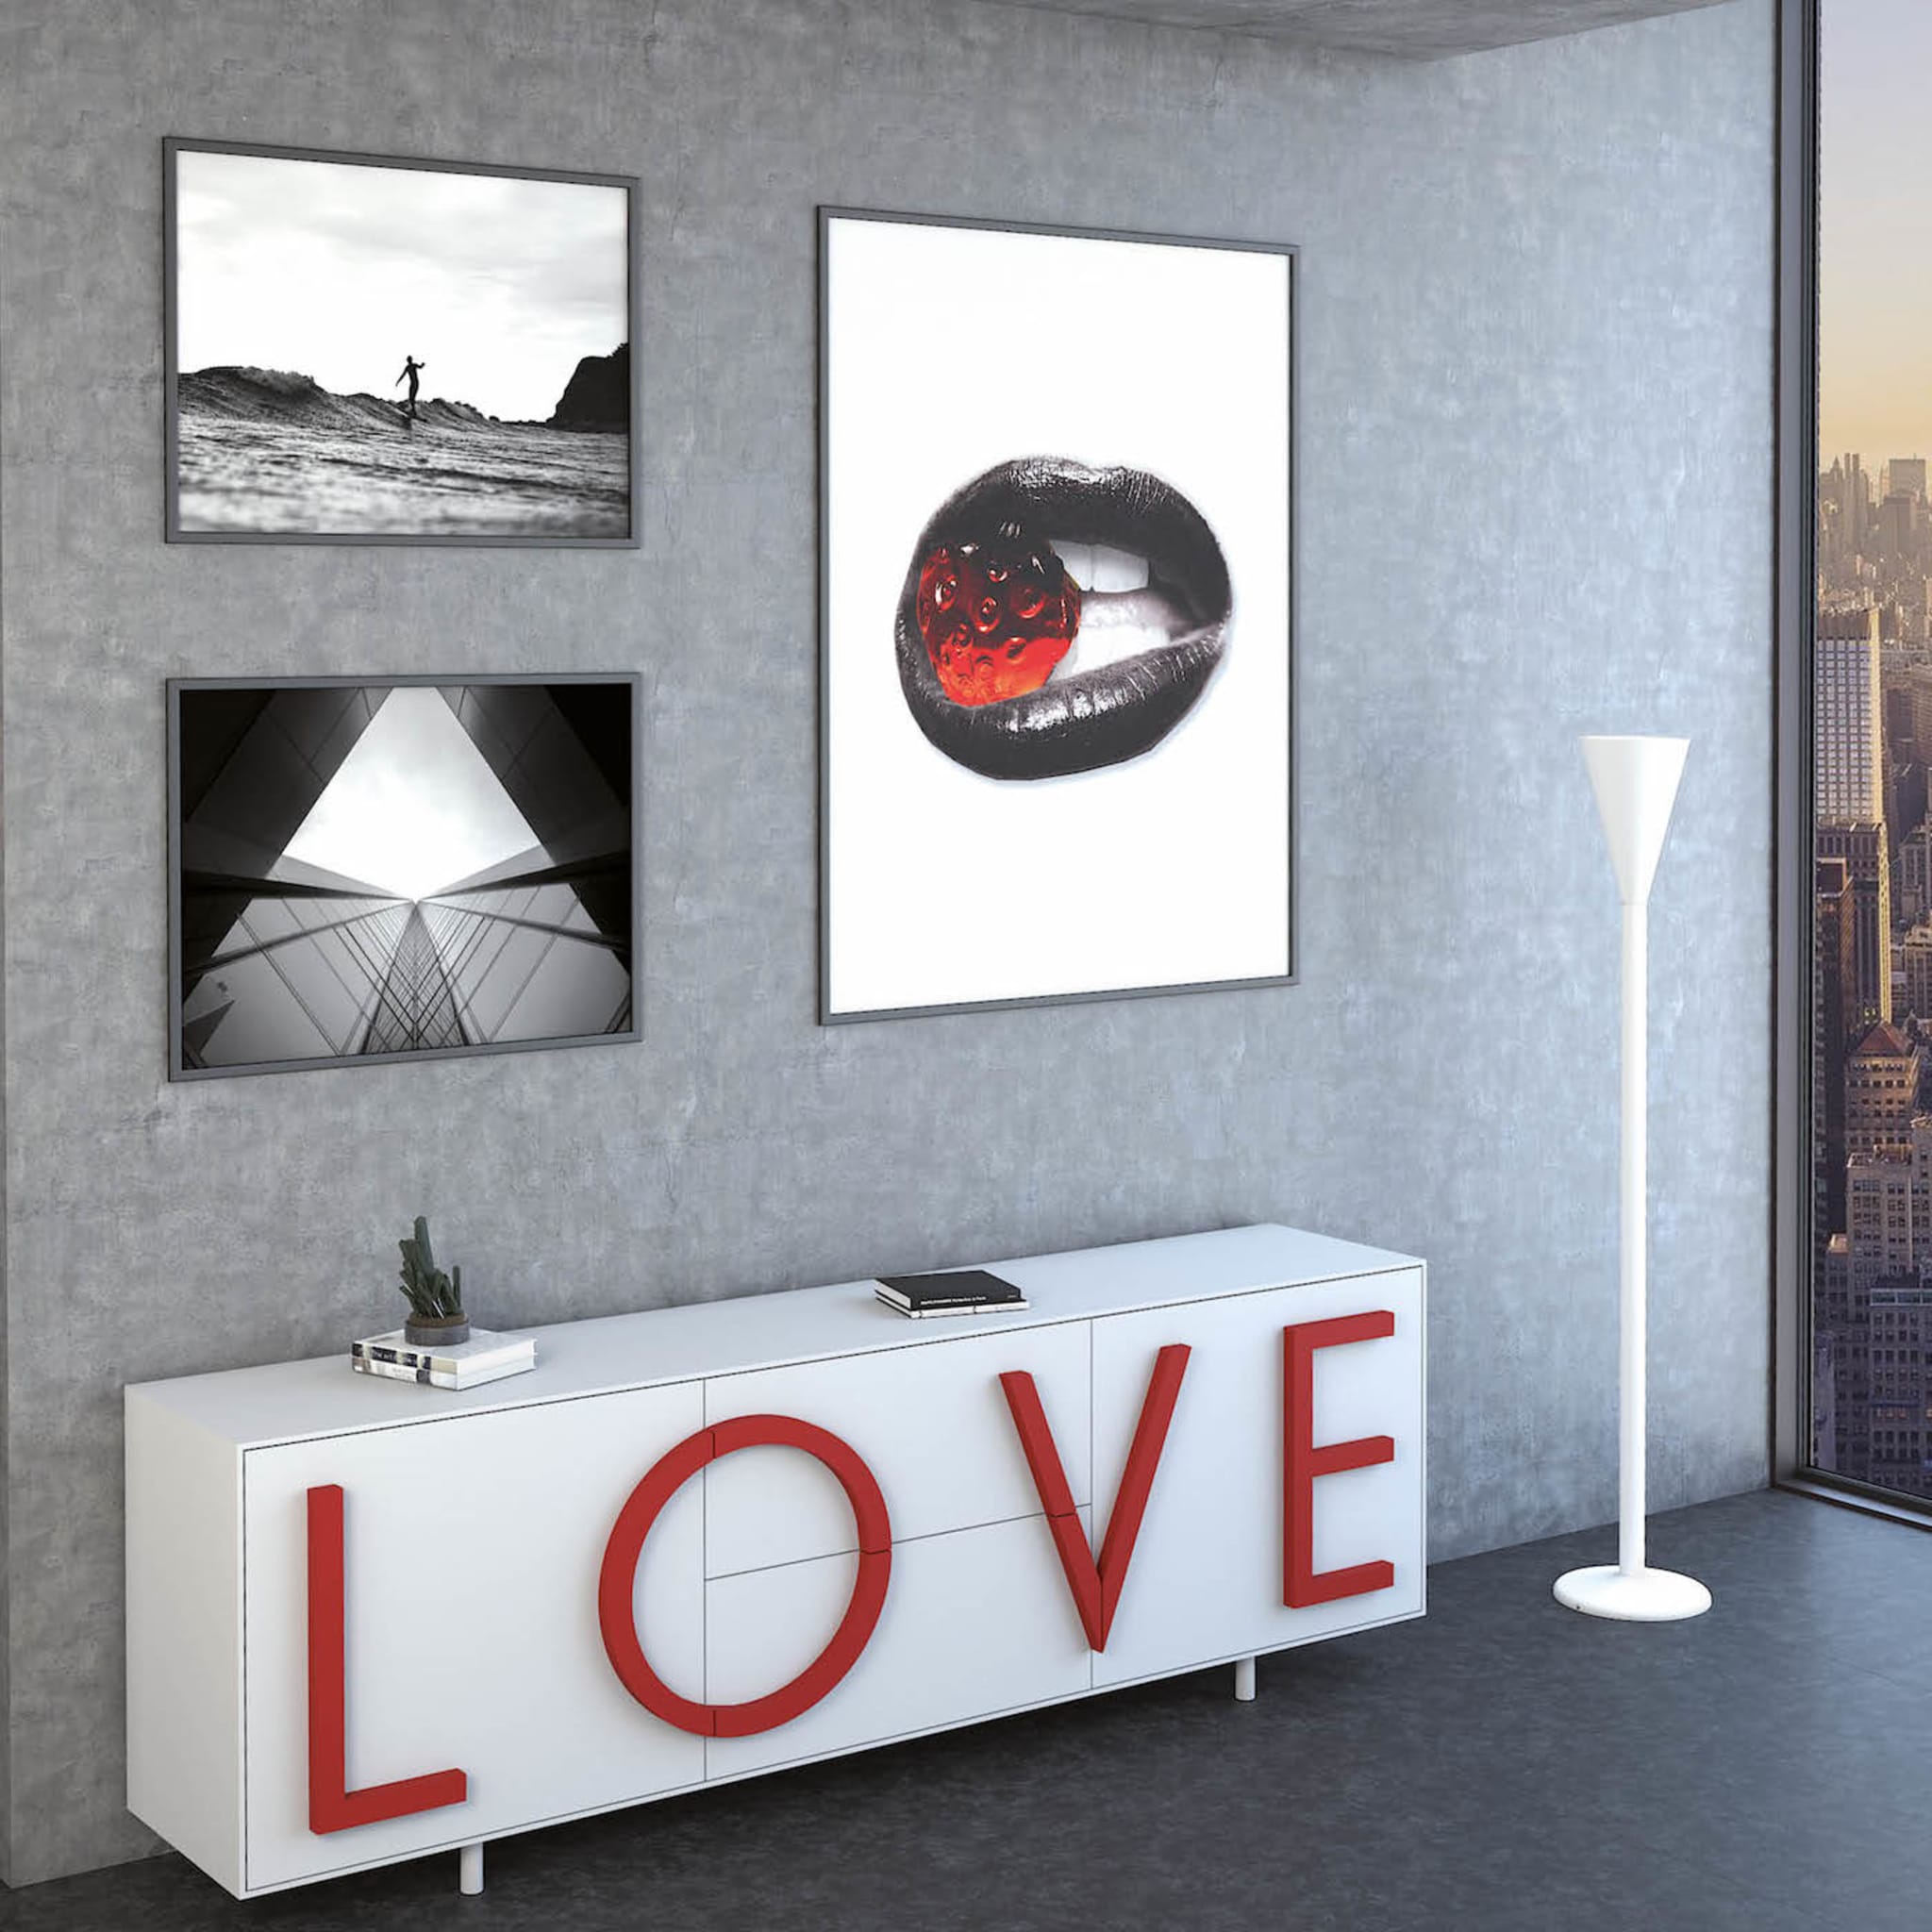 Love White & Red Sideboard by Fabio Novembre - Alternative view 1